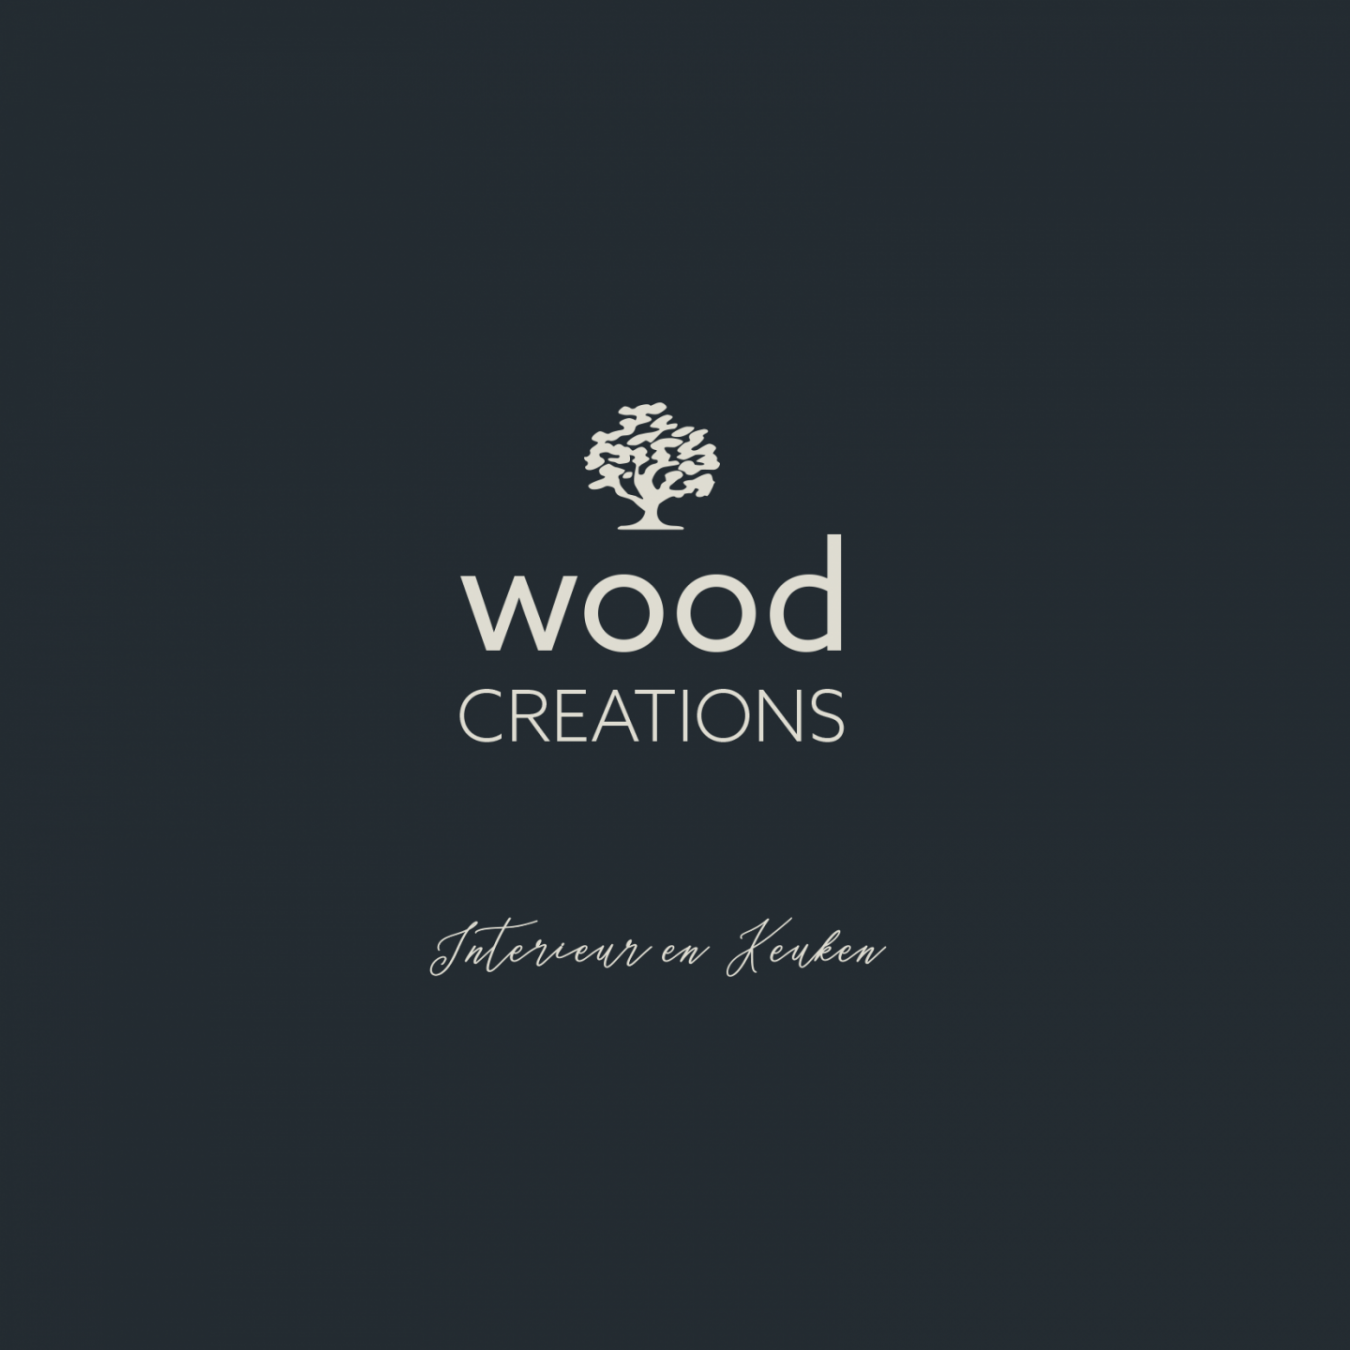 Wood creations referentie